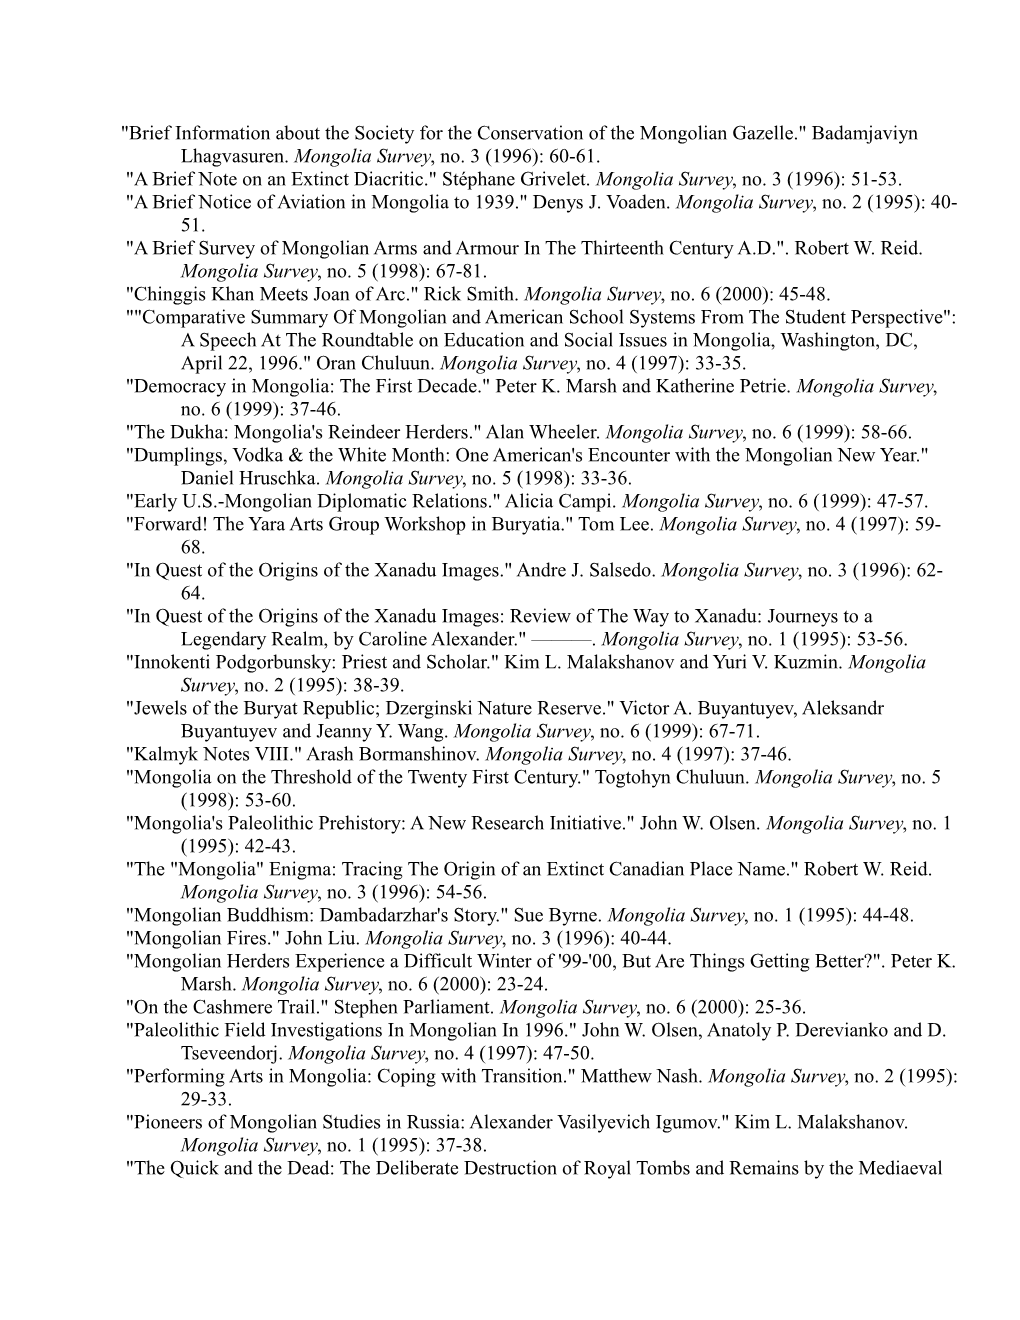 A Brief Note on an Extinct Diacritic. Stéphane Grivelet. Mongolia Survey, No. 3 (1996): 51-53